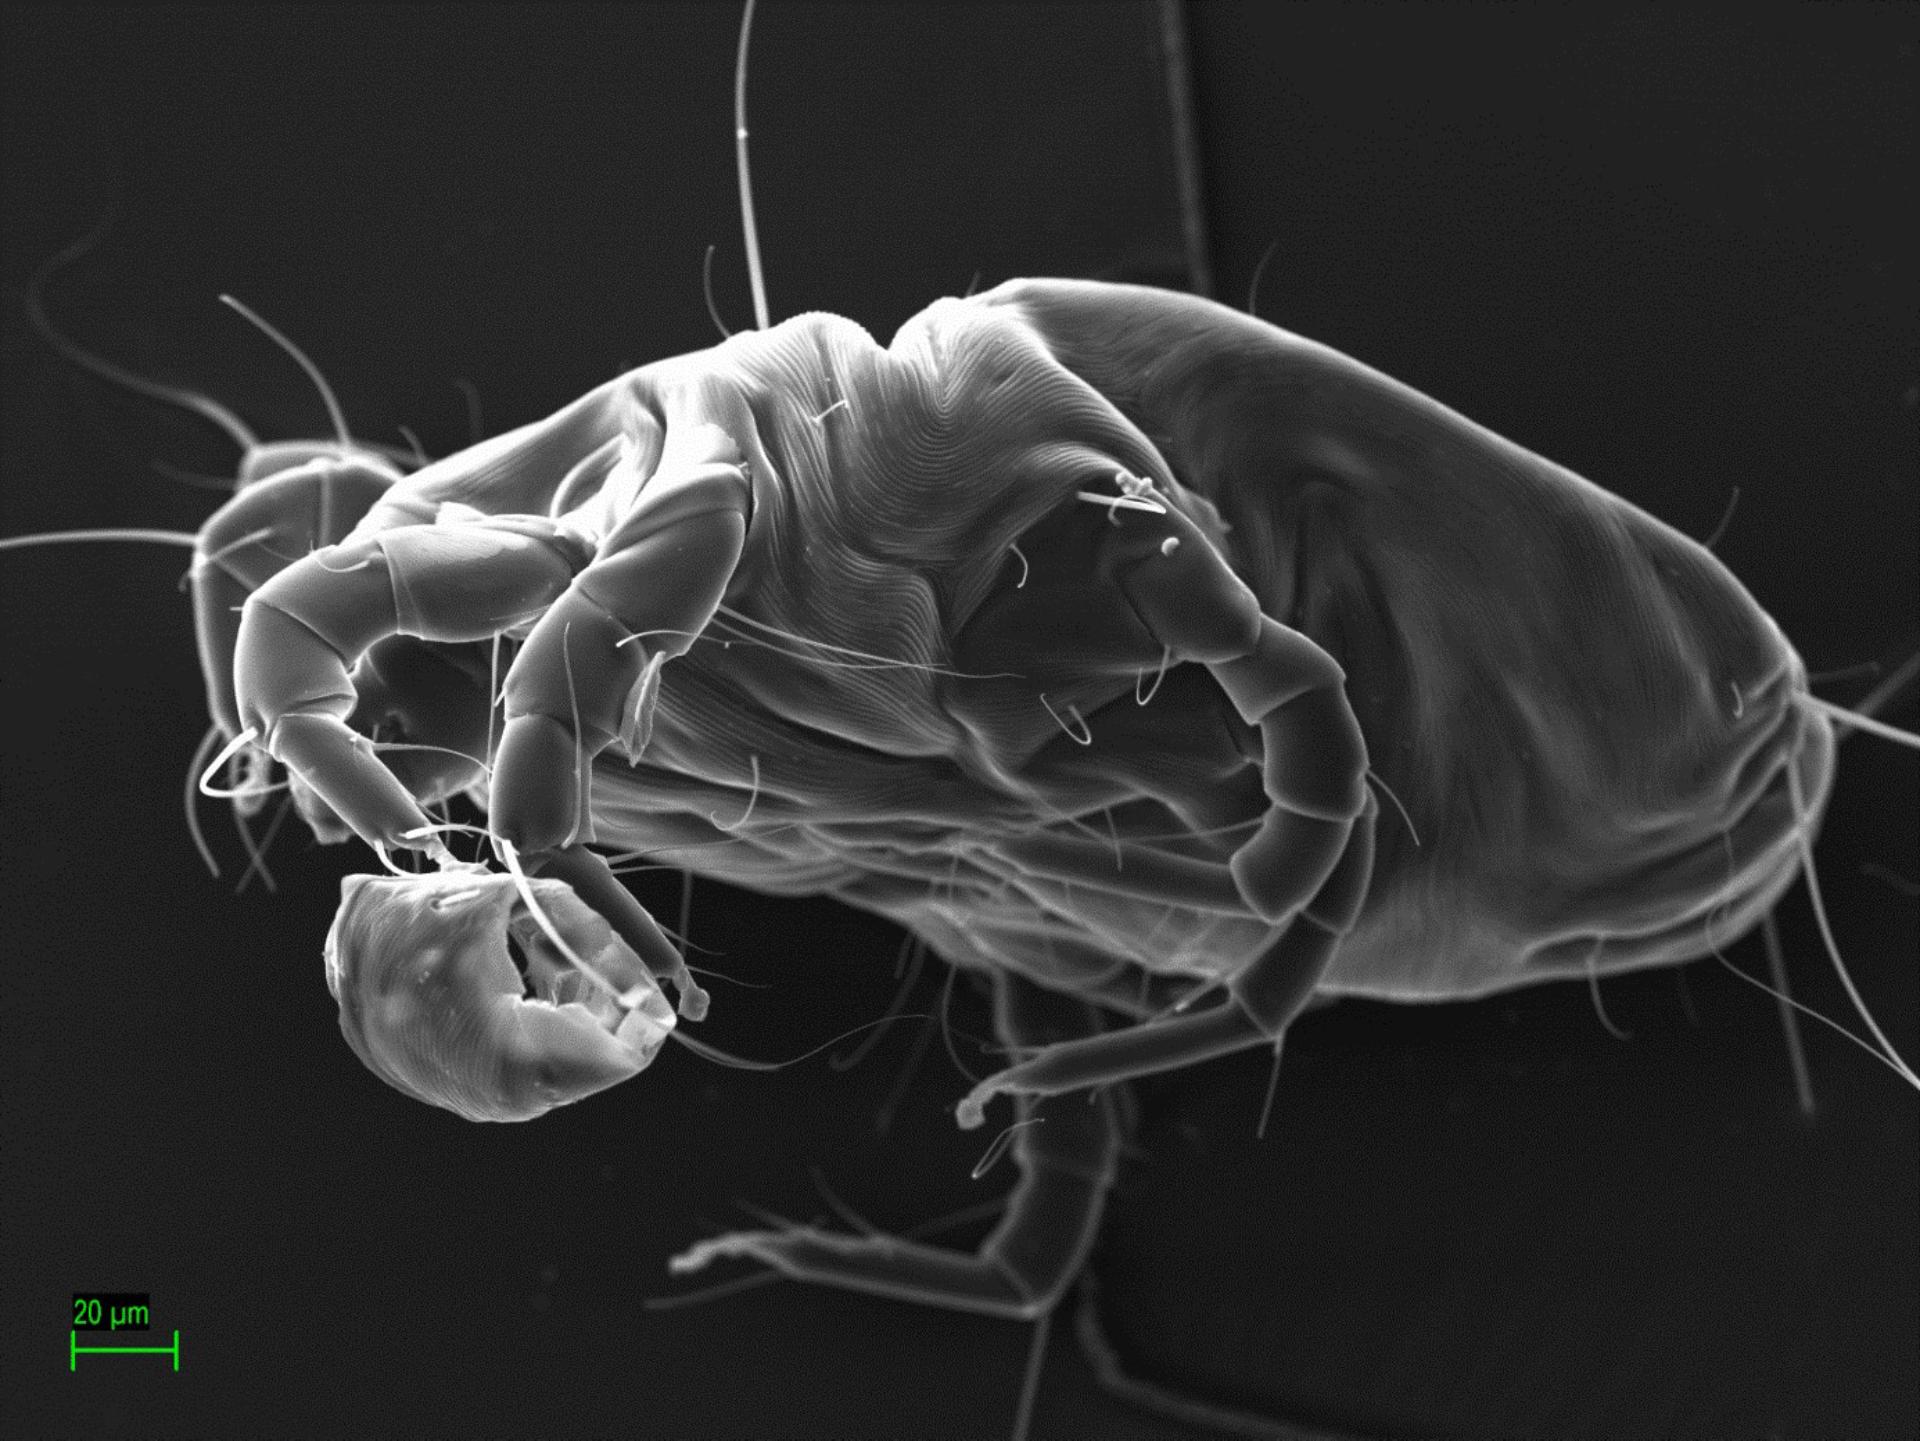 Dust mite under microscope